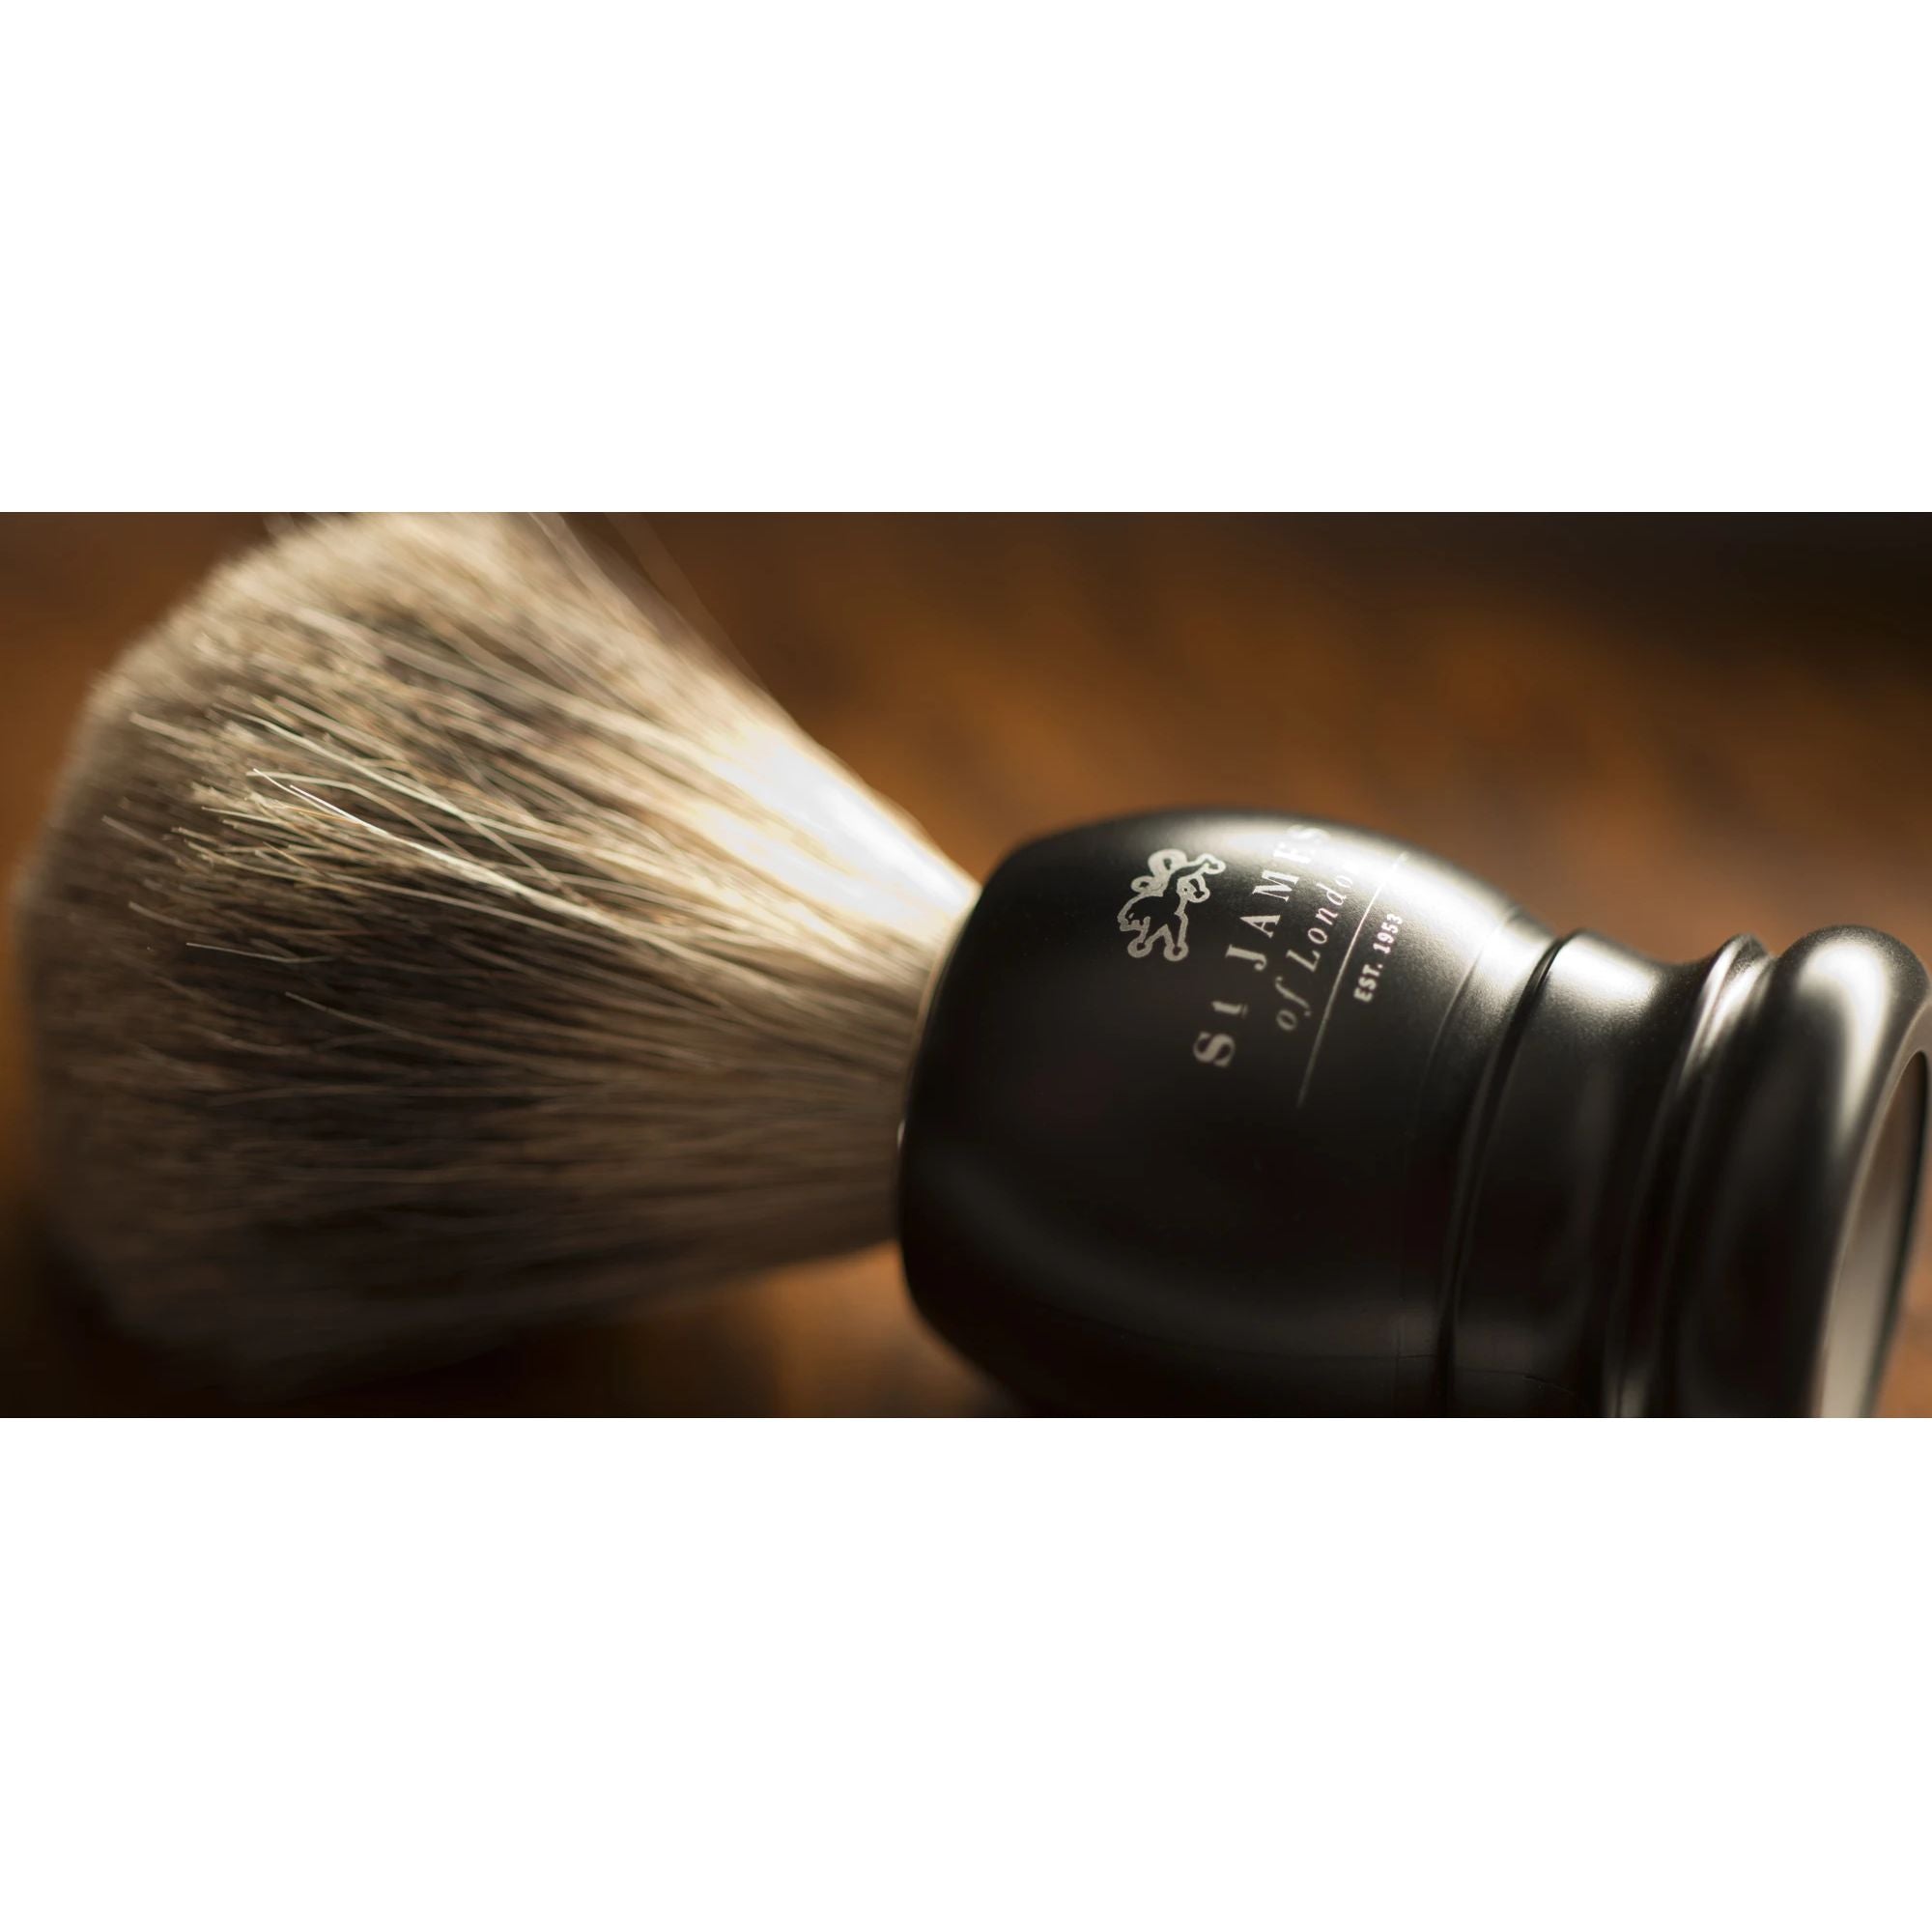 Natural Badger Shaving Brush in Ash (Matte Black) by St. James of London